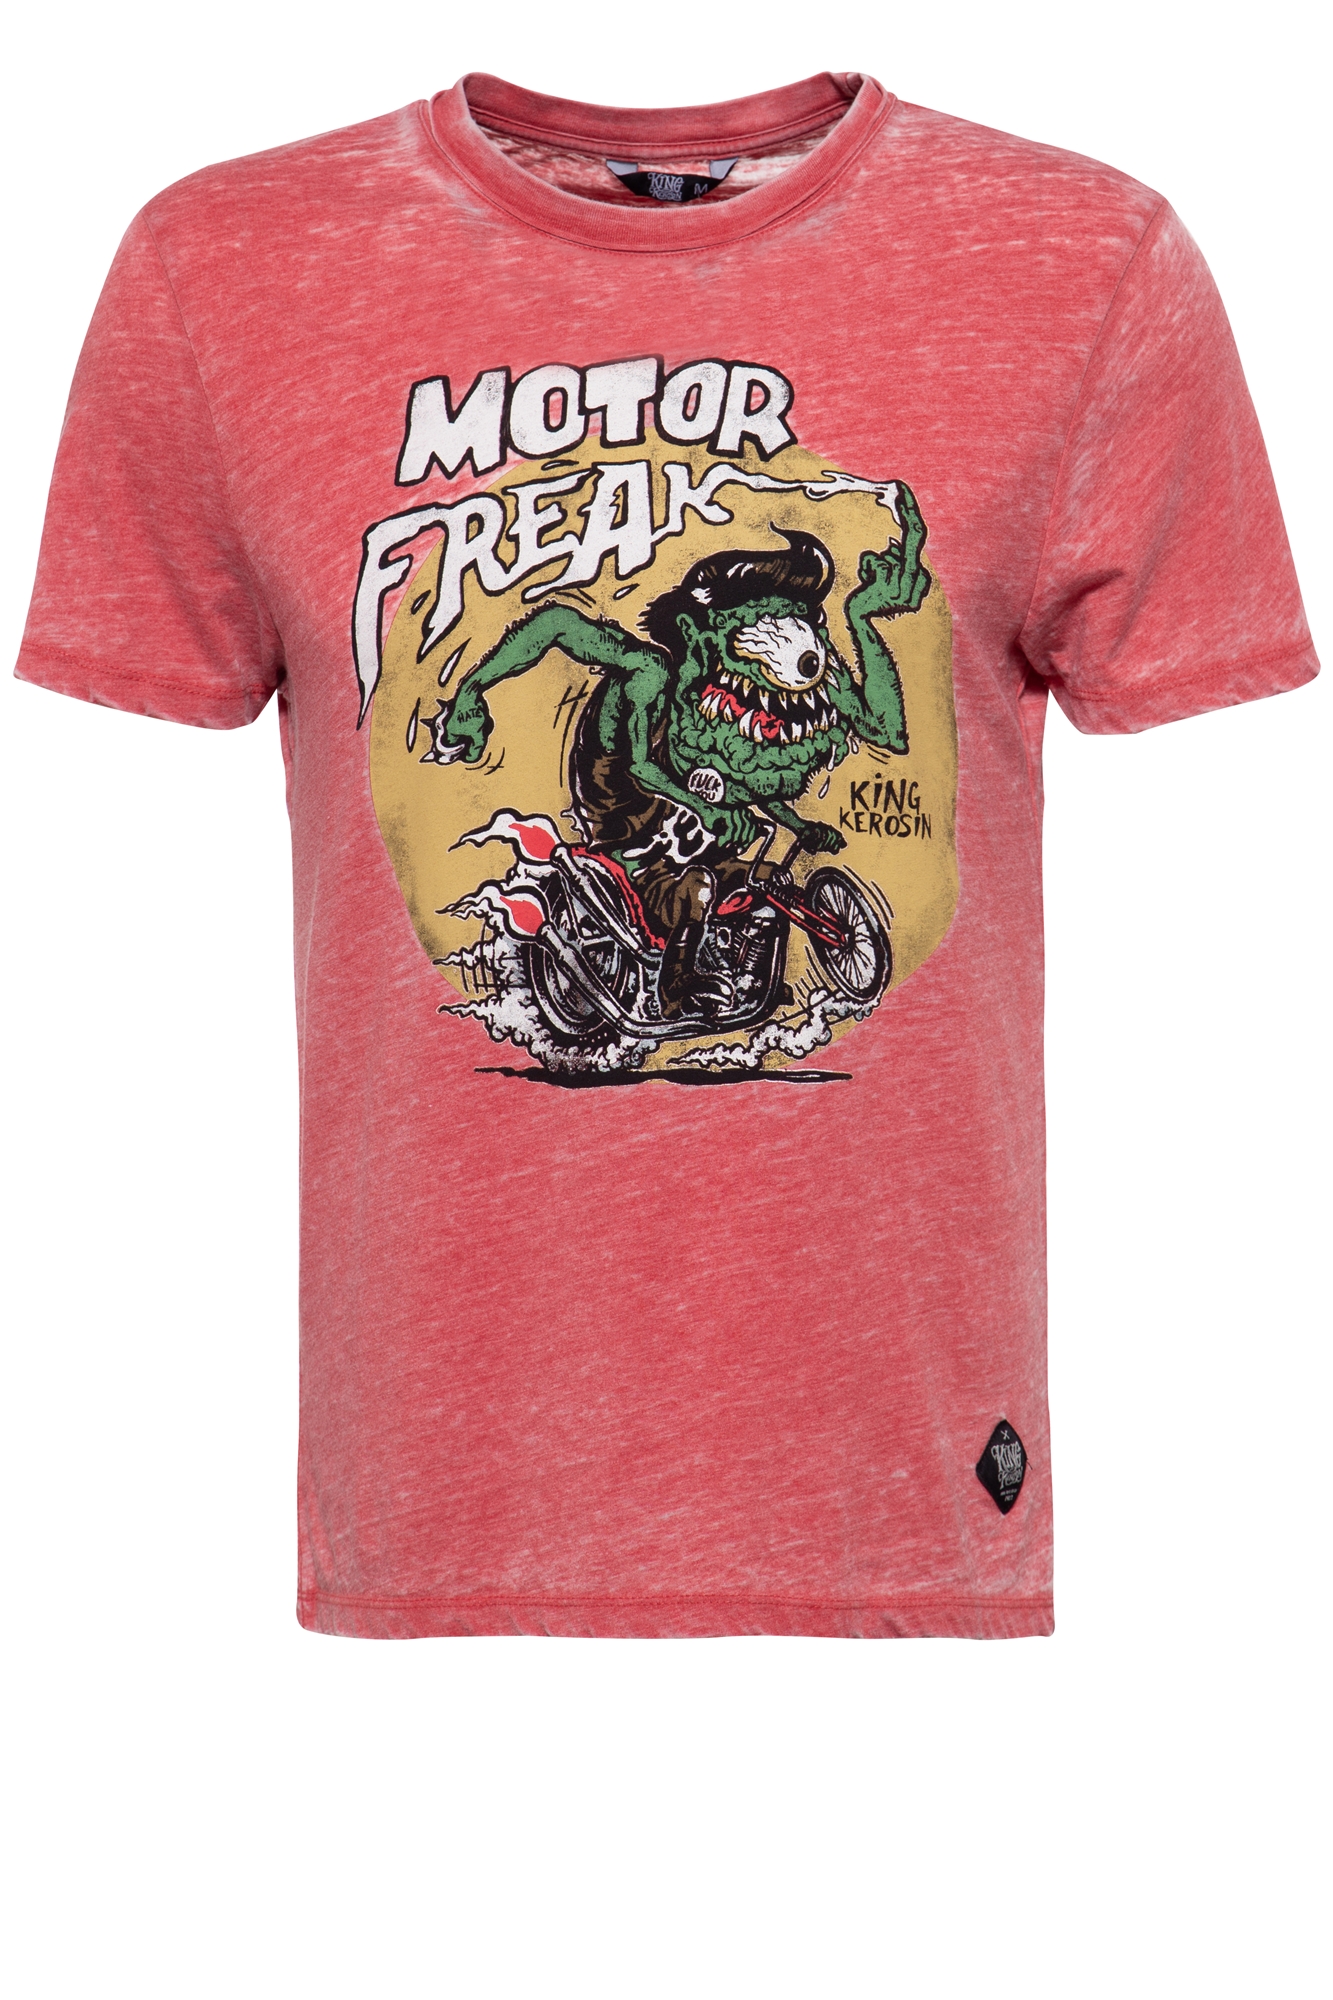 King Kerosin T-Shirt - Motor Freak S